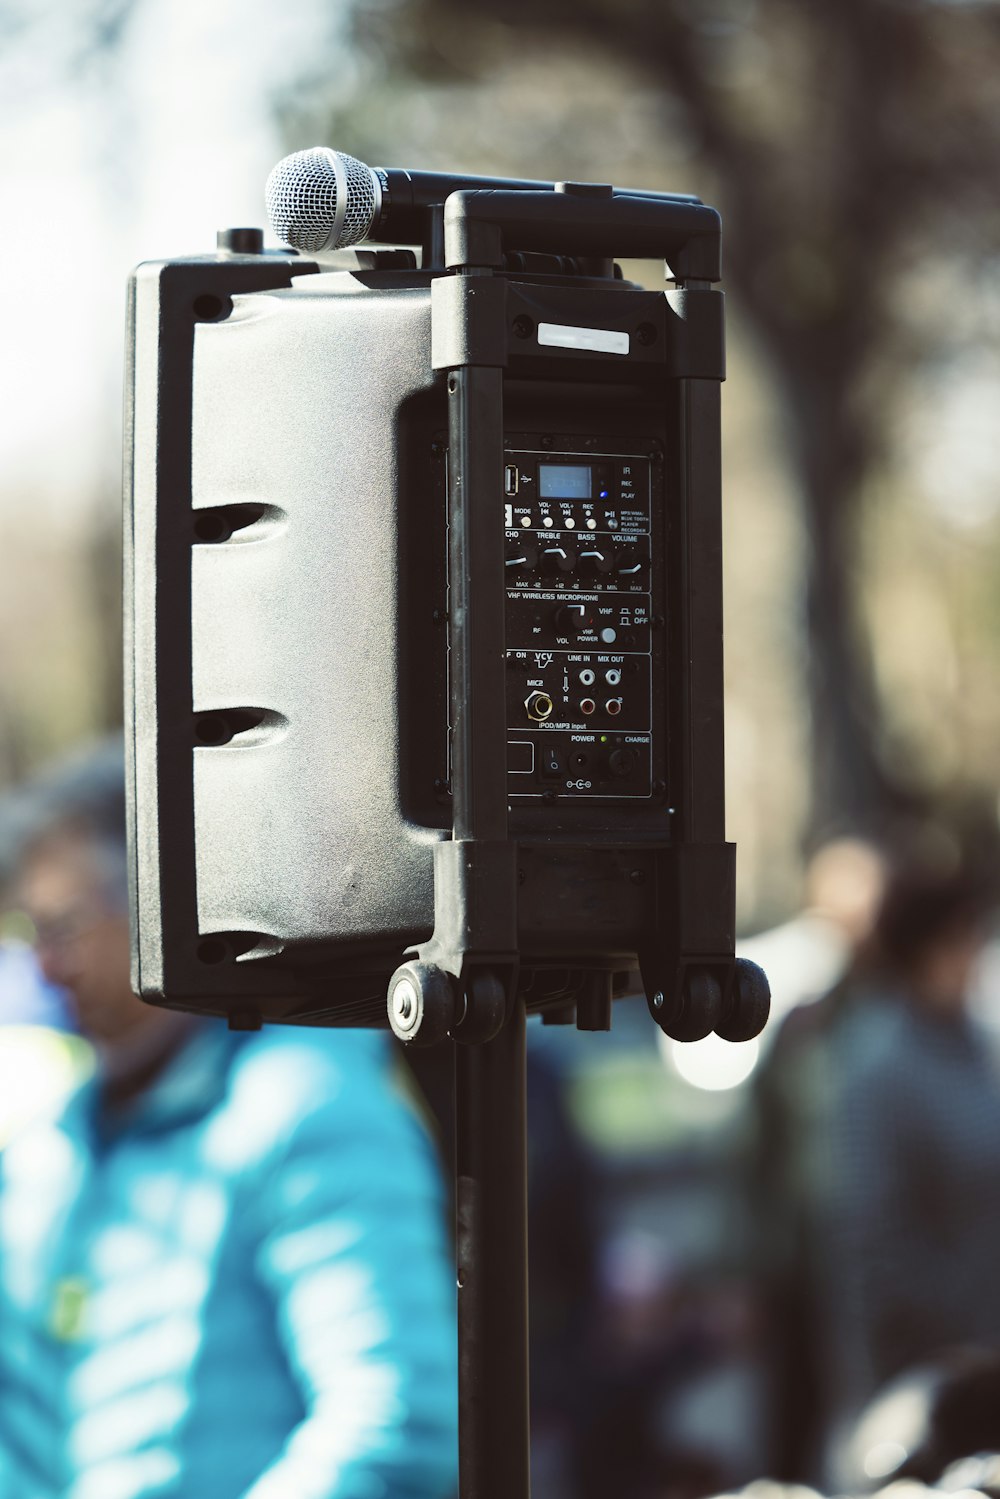 a close up of a camera on a tripod